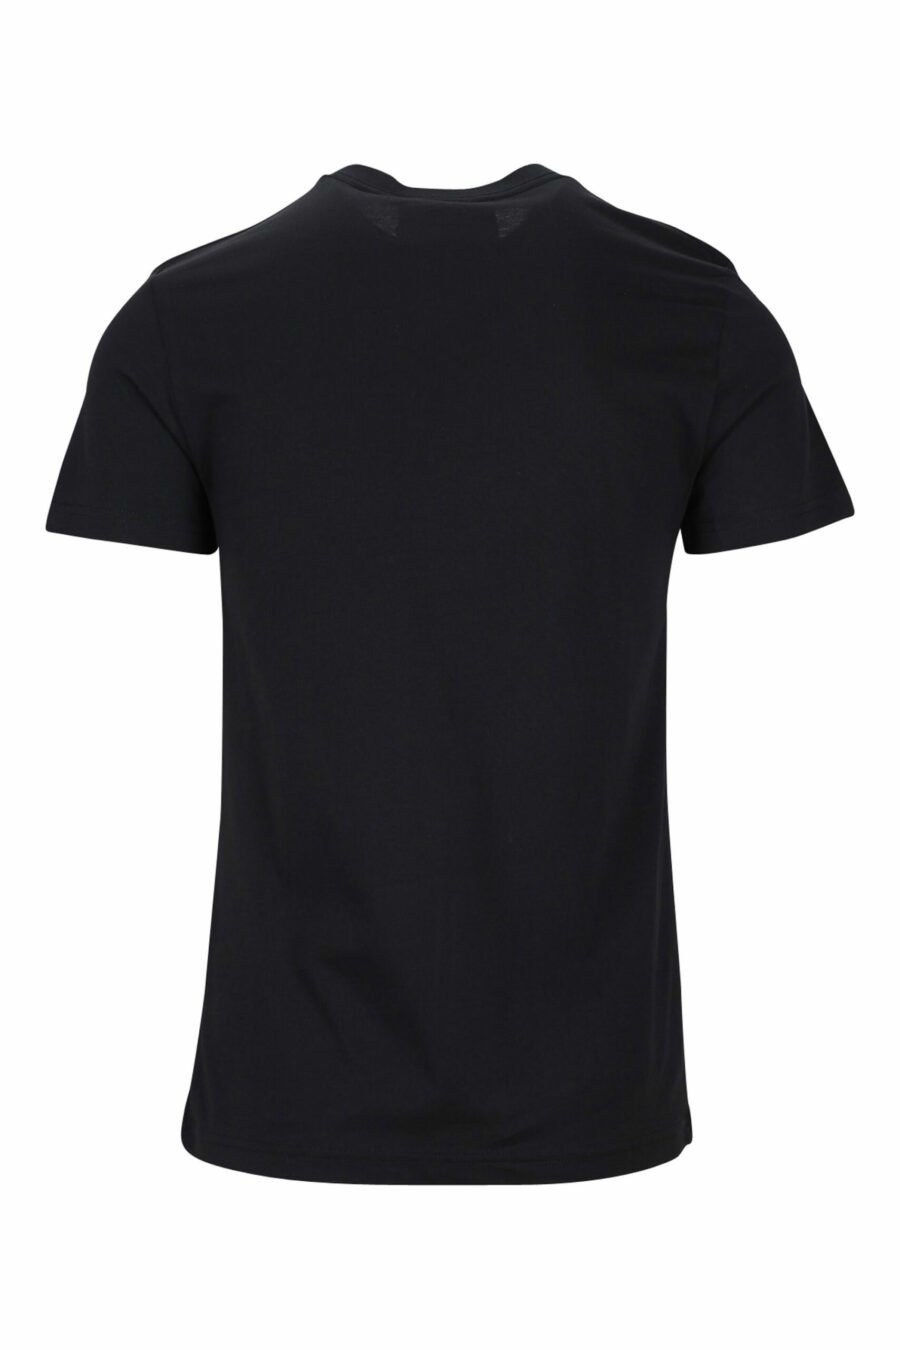 Schwarzes T-Shirt mit goldenem "Stückzahl"-Minilogo - 8052019456875 1 skaliert